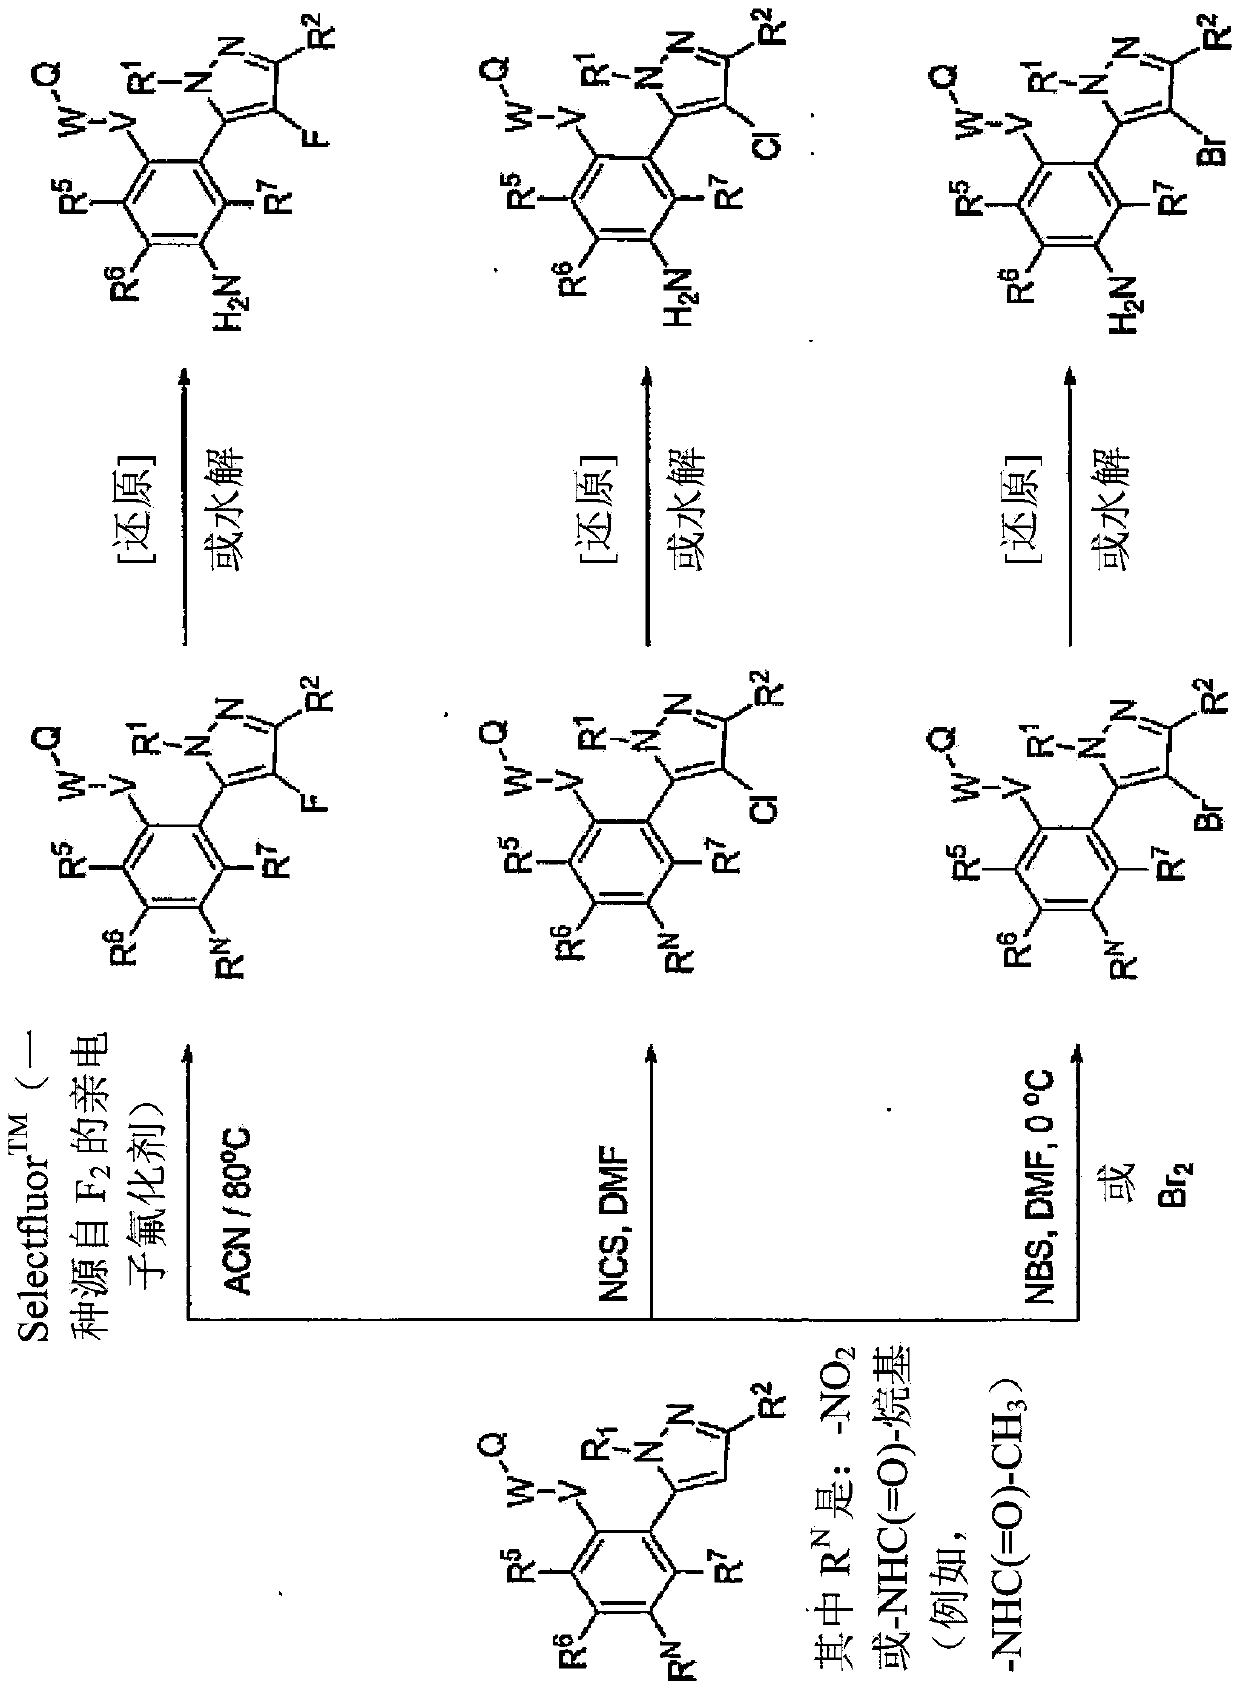 Modifier of 5-HT2A serotonin receptor